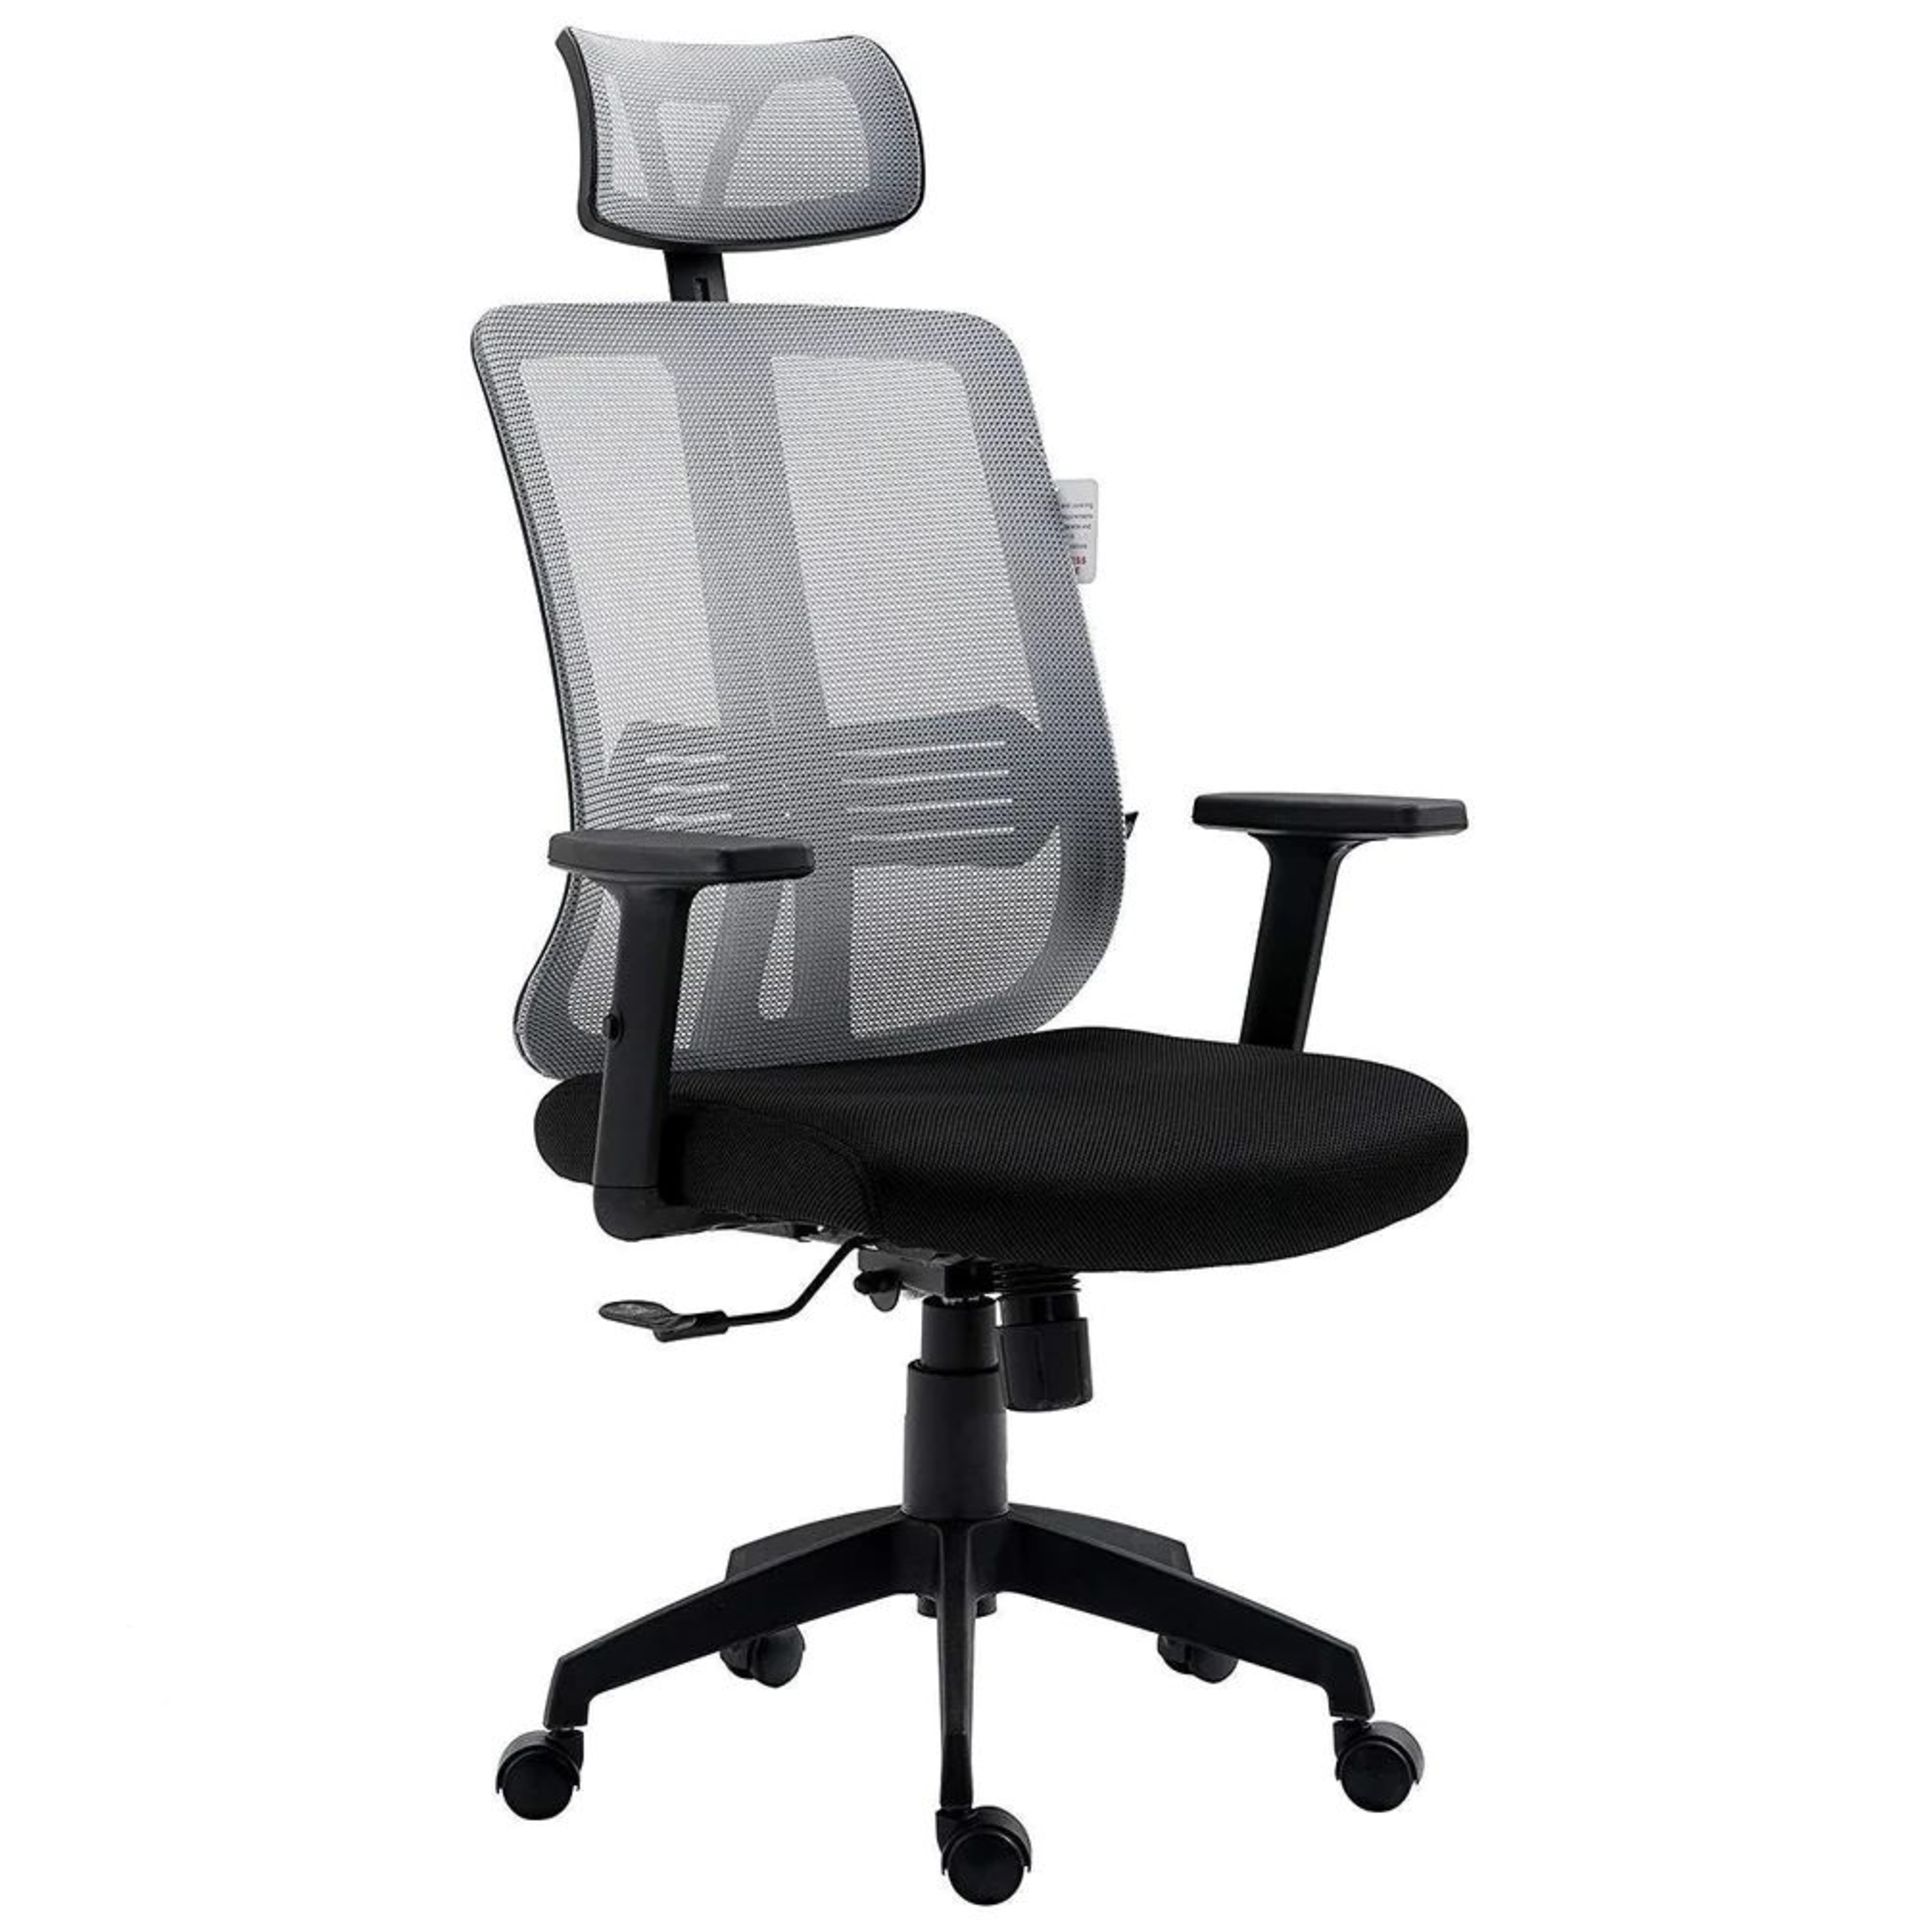 Grey Mesh High Back Executive Office Chair Swivel Desk Chair with Synchro-Tilt, Adjustable Armrest &